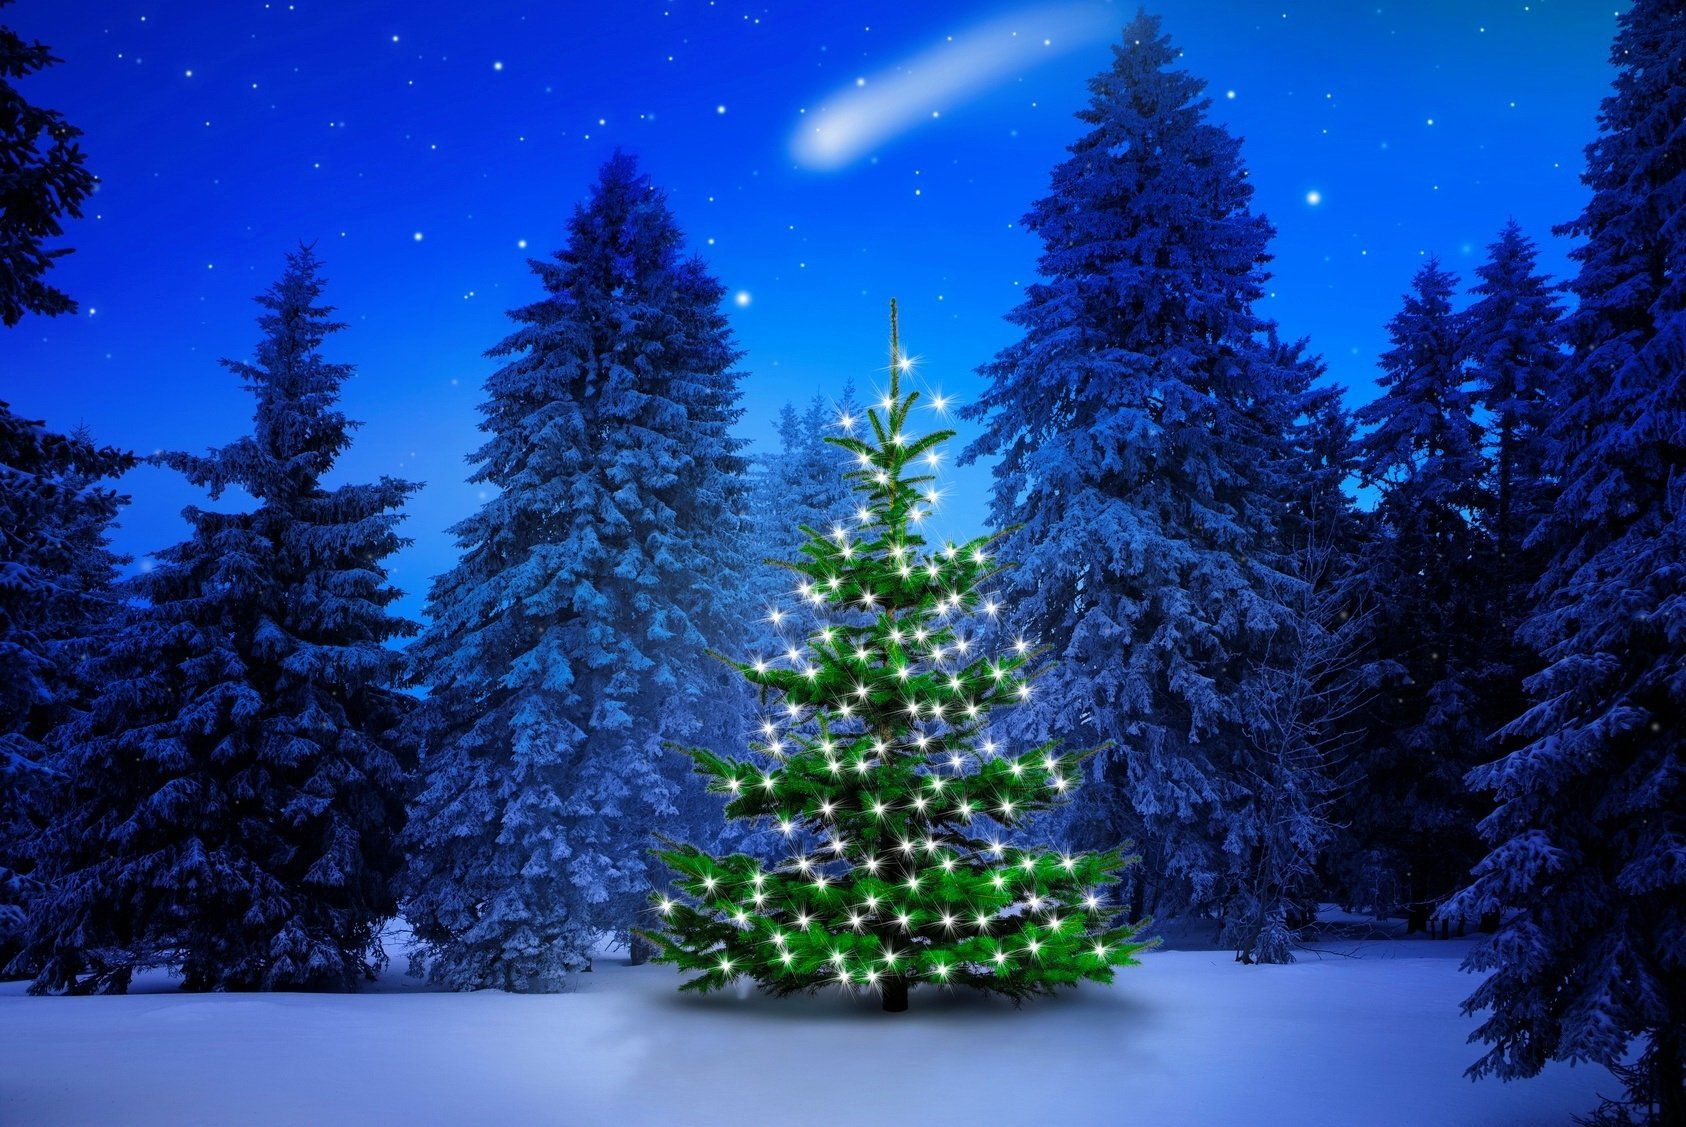 Lighted Tree in Winter Forest Computer Wallpaper, Desktop. Christmas tree wallpaper, Beautiful christmas trees, Winter wallpaper desktop